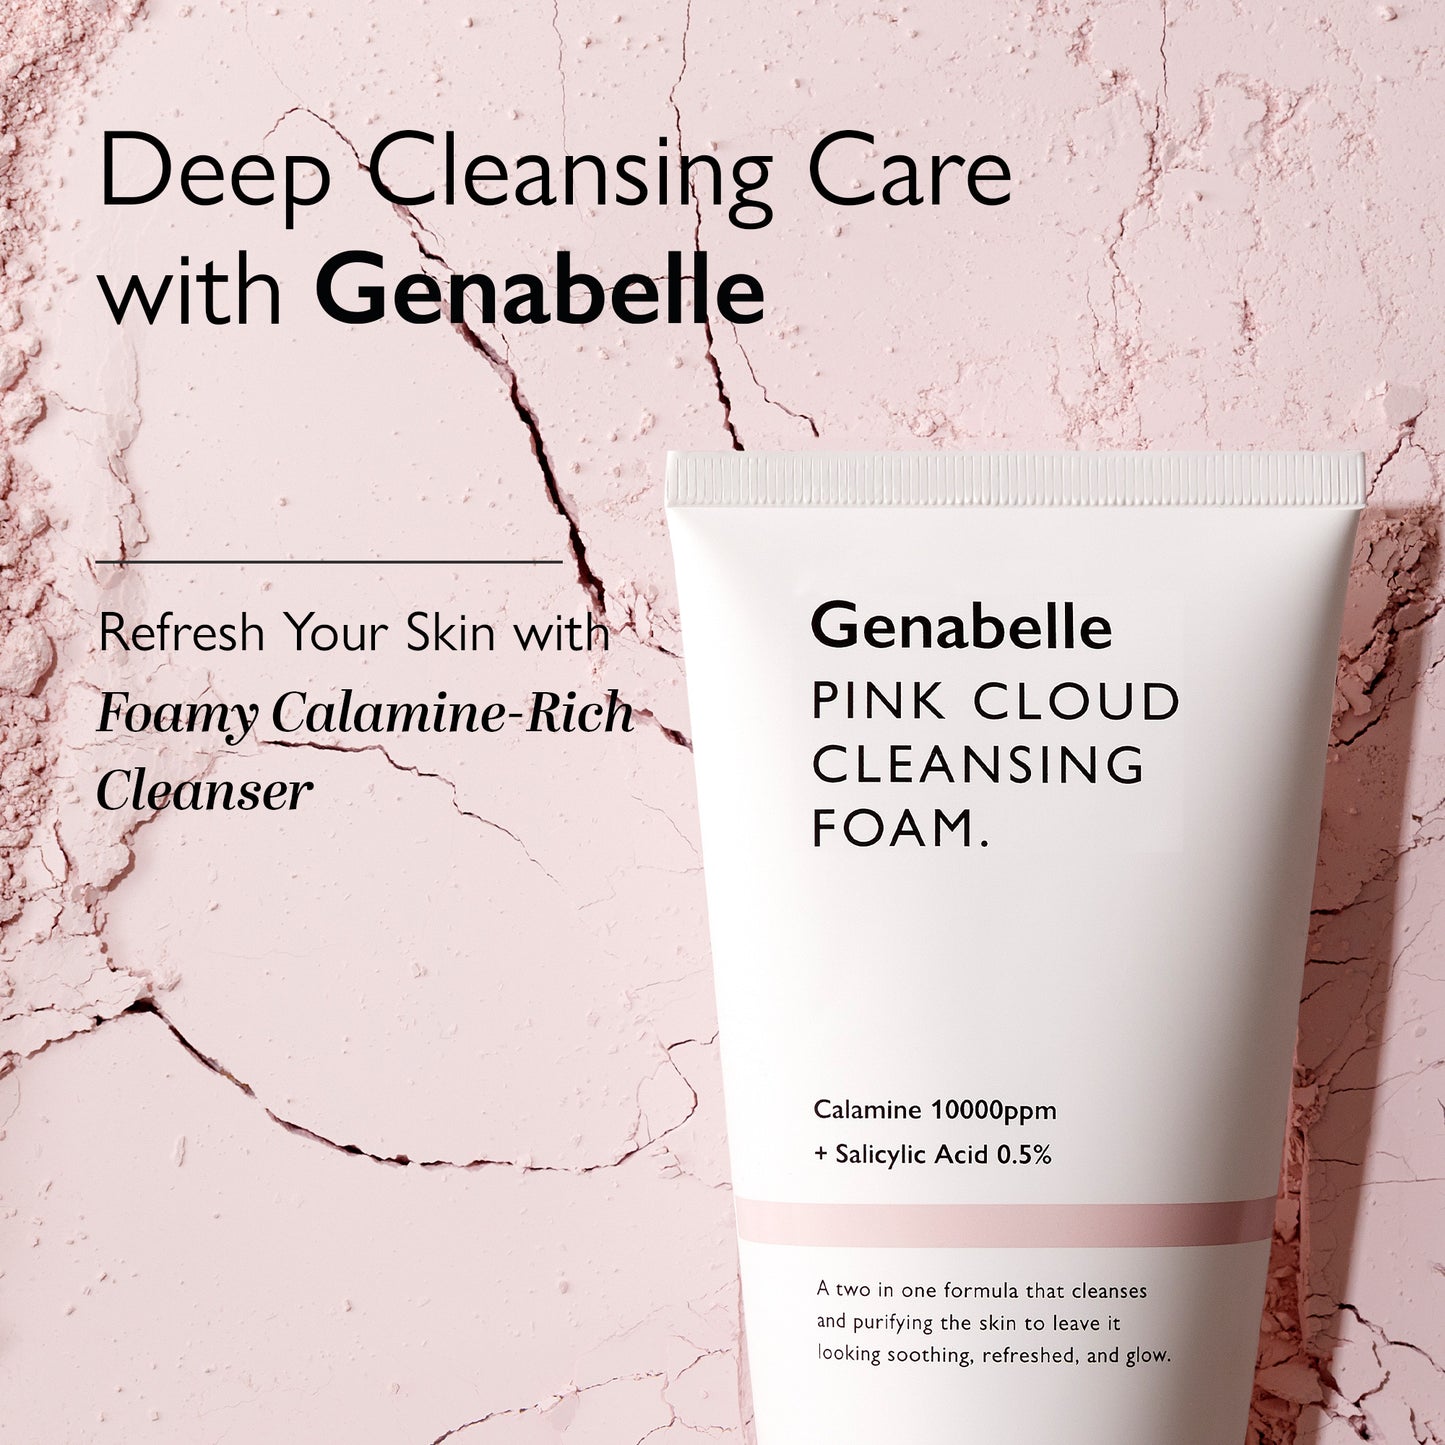 Genabelle  PINK CLOUD CLEANSING FOAM